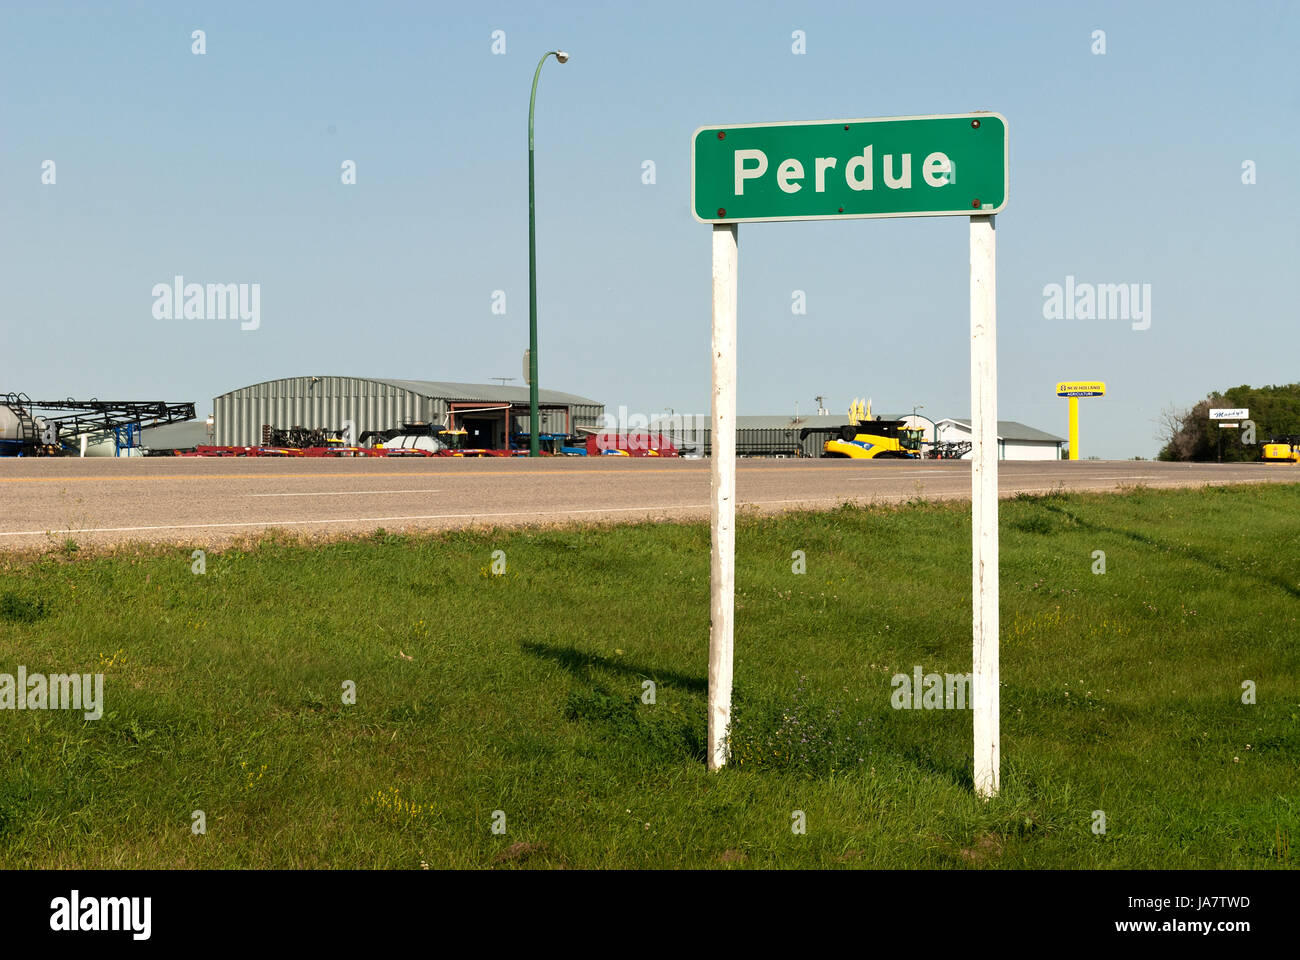 Town sign for Perdue, Saskatchewan, Canada Stock Photo